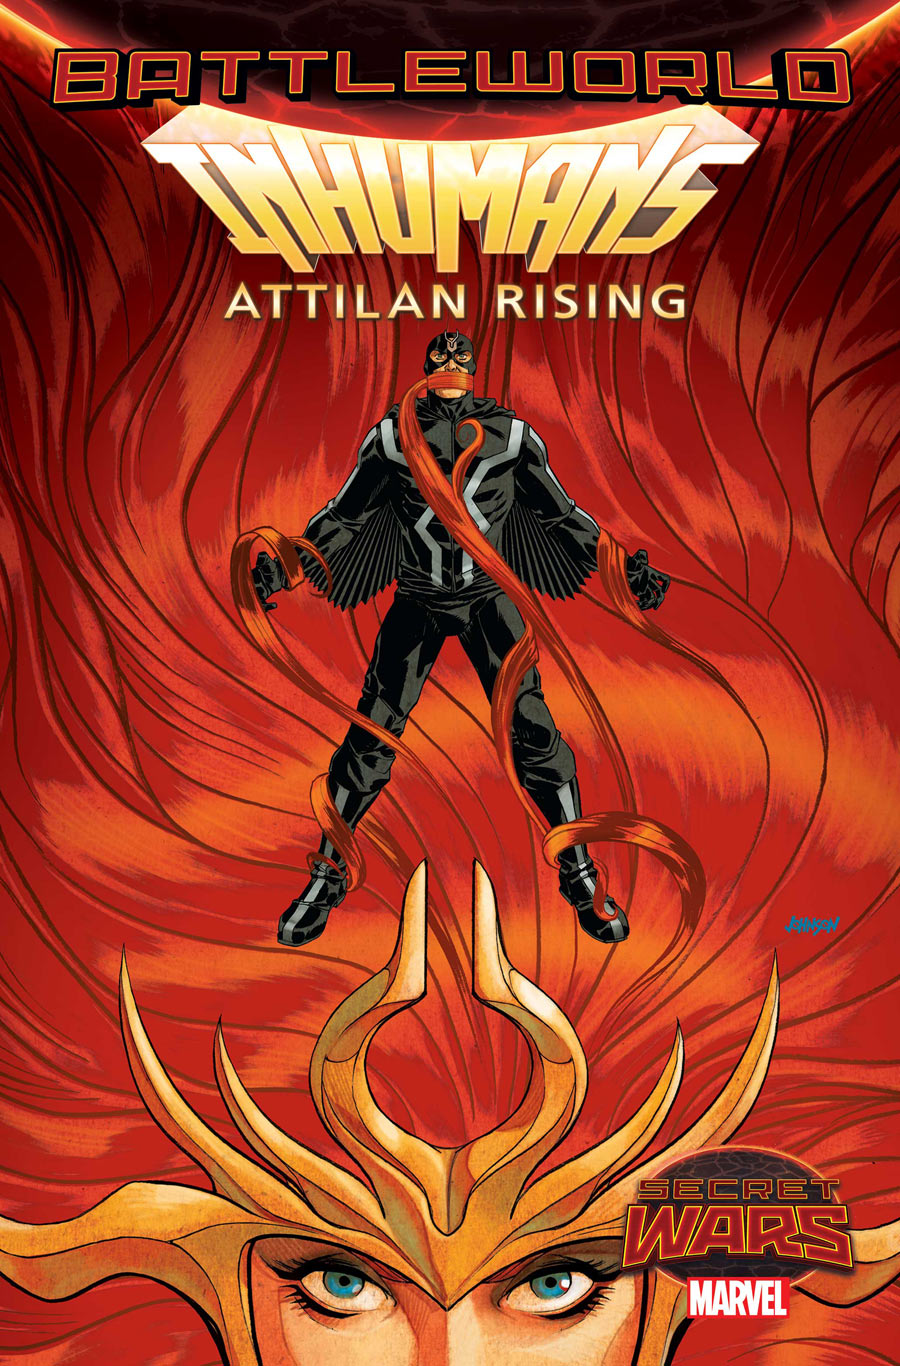 Atilian-Rising-3-e674d